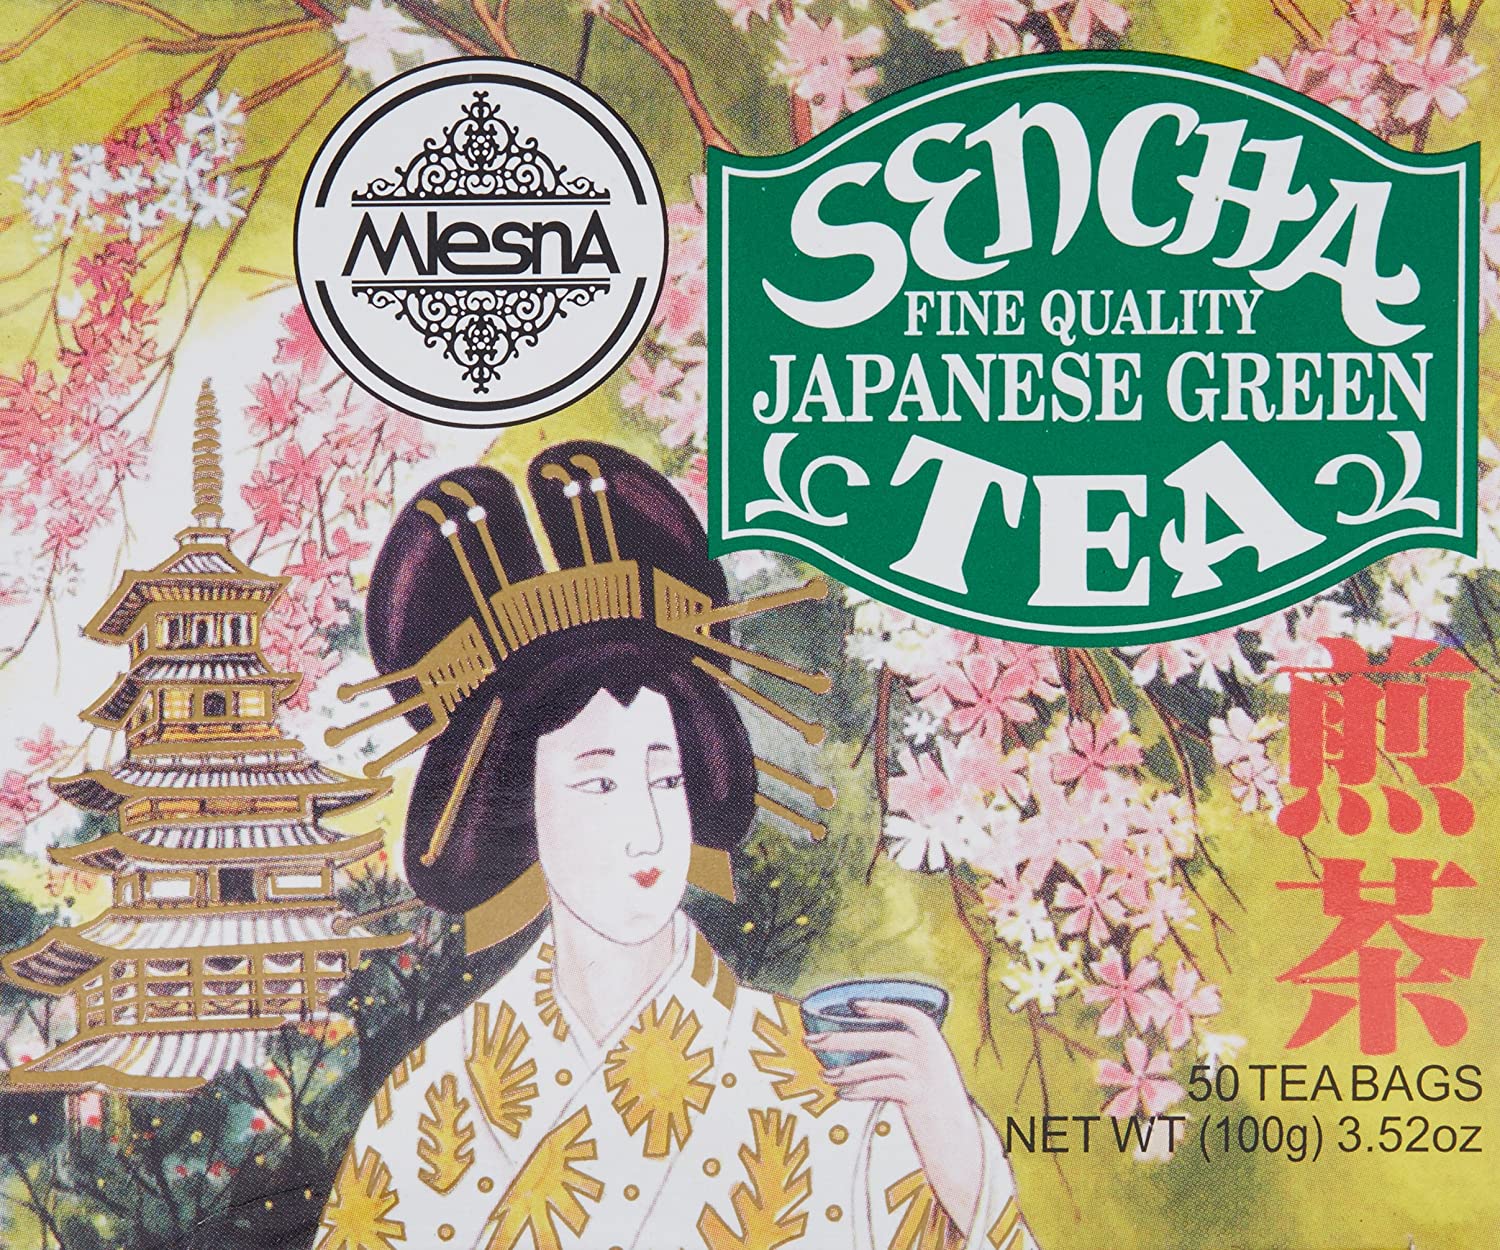 Mlesna Sencha Japanese Green Tea, 50 Count Tea Bags